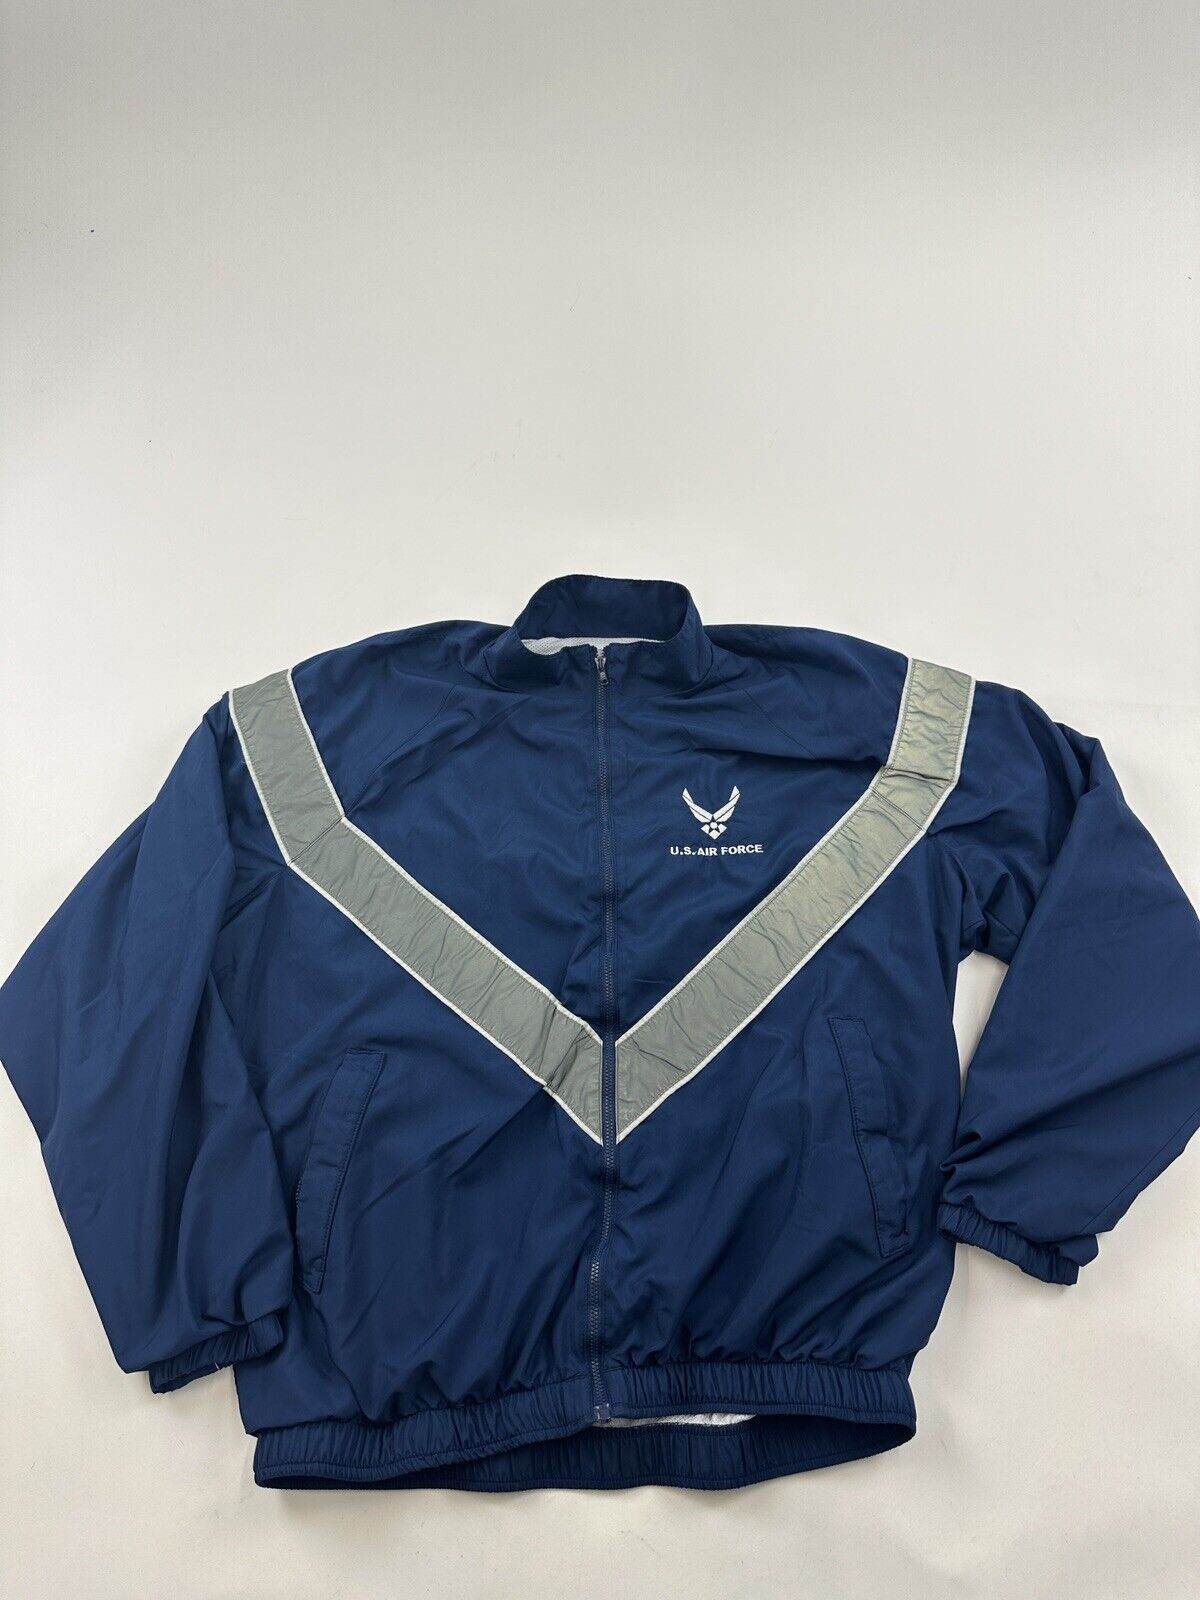 USAF Air Force PT Jacket Men Small Regular Blue Full Zip Official Uniform